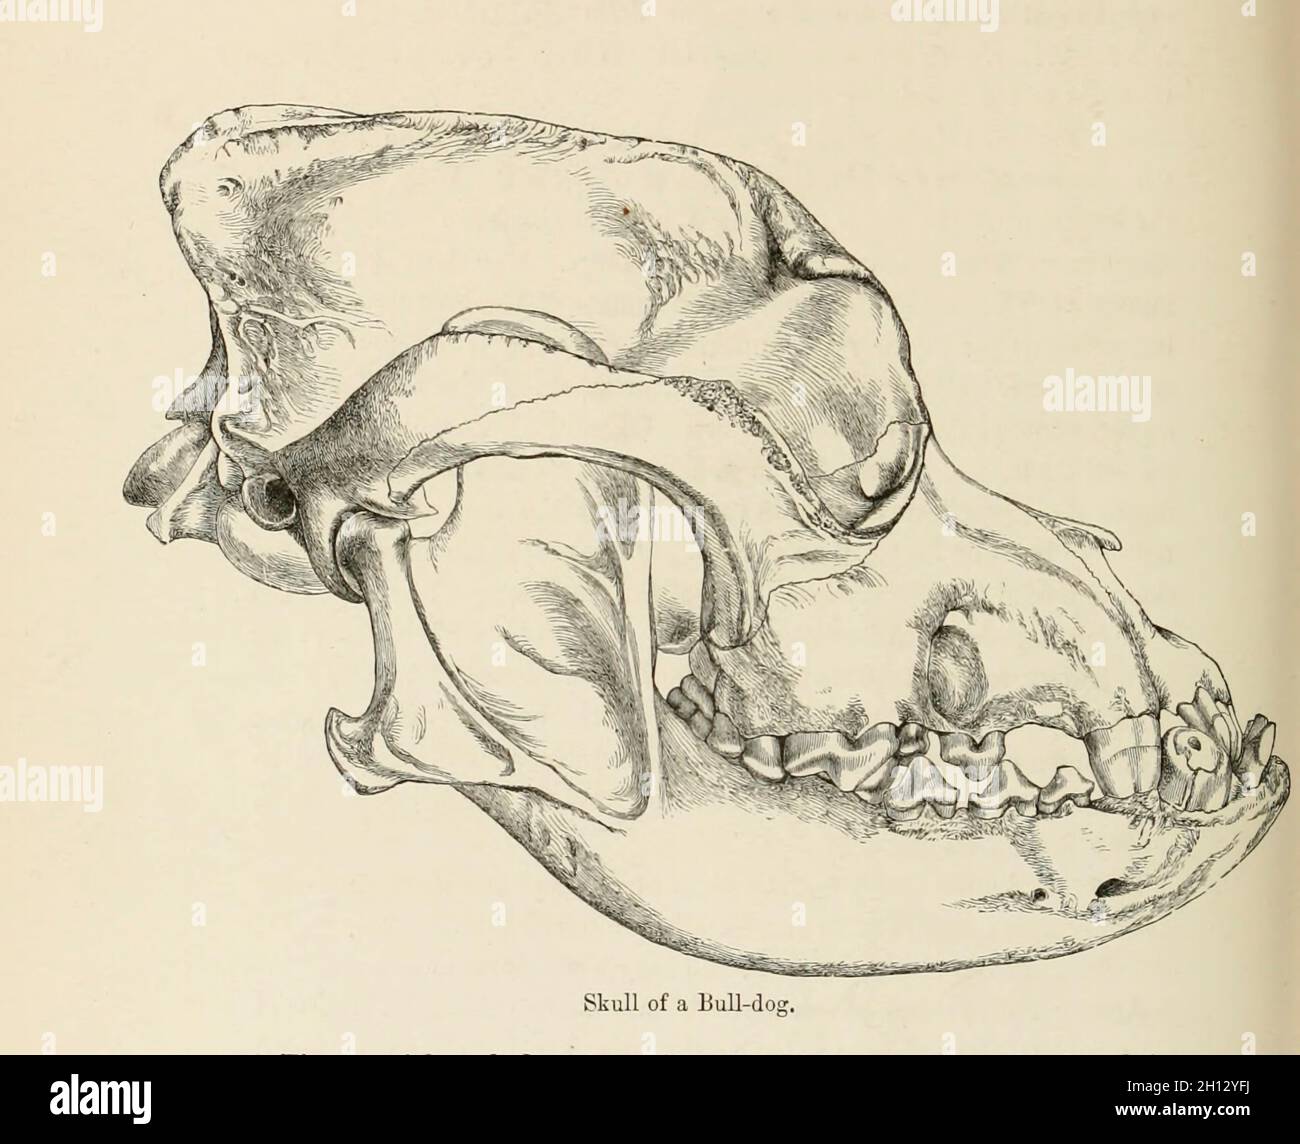 Skull of a bulldog, 19th century illustration Stock Photo